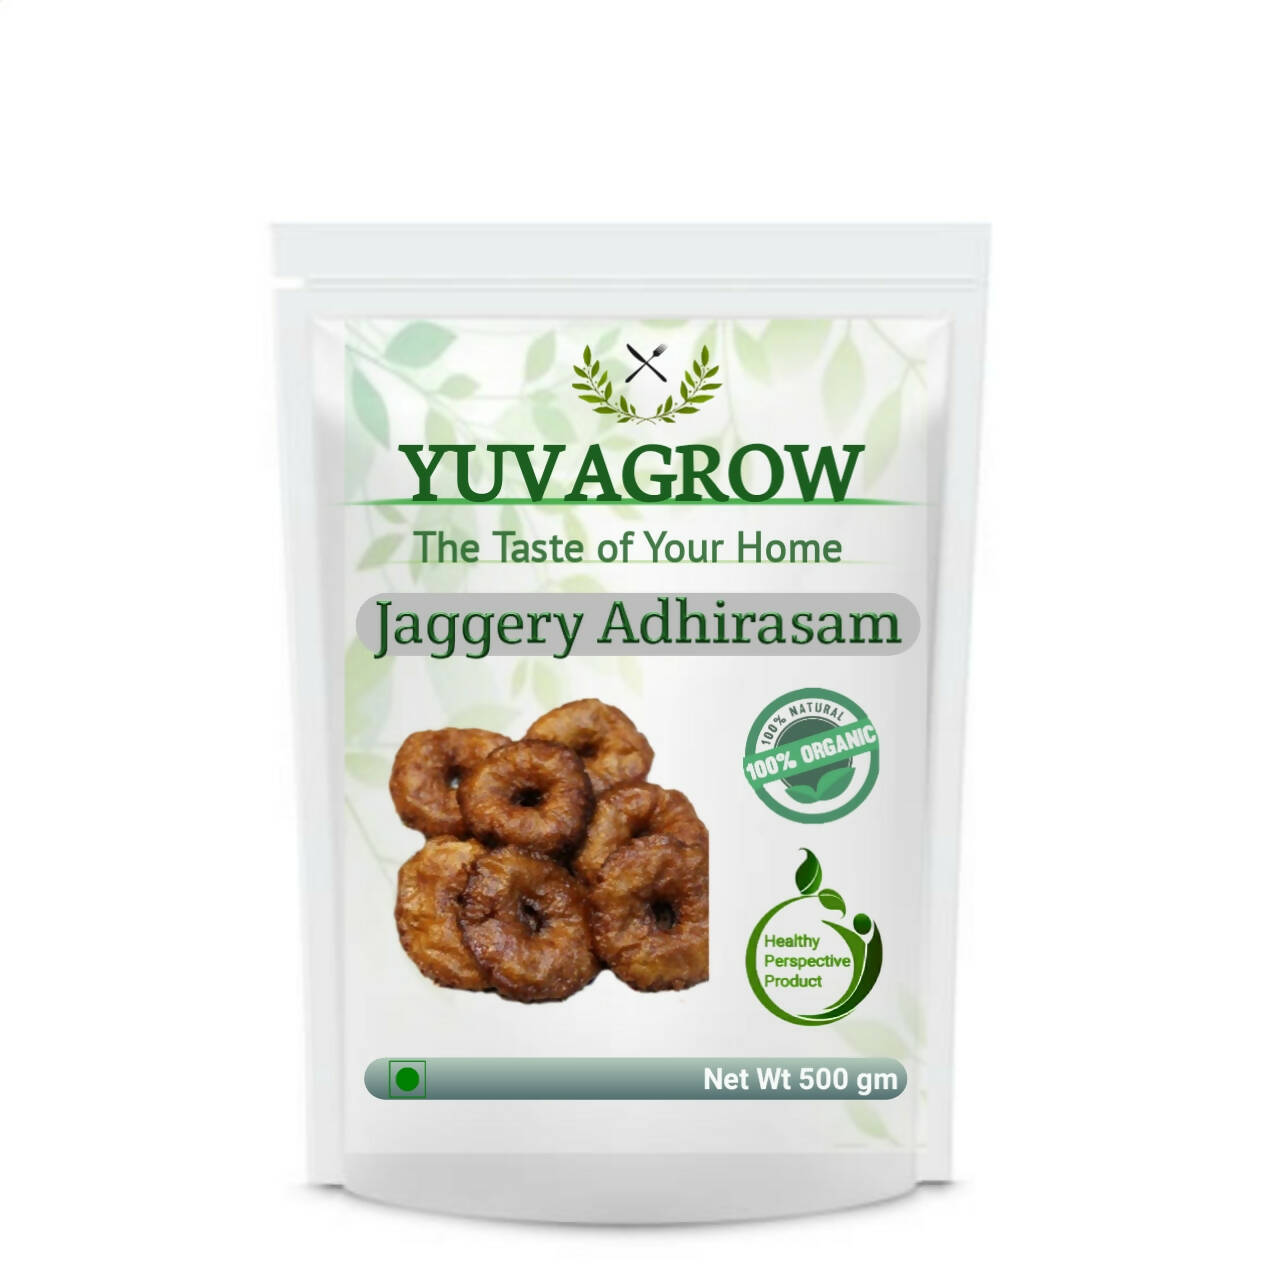 Yuvagrow Traditional Jaggery Adhirasam - buy in USA, Australia, Canada